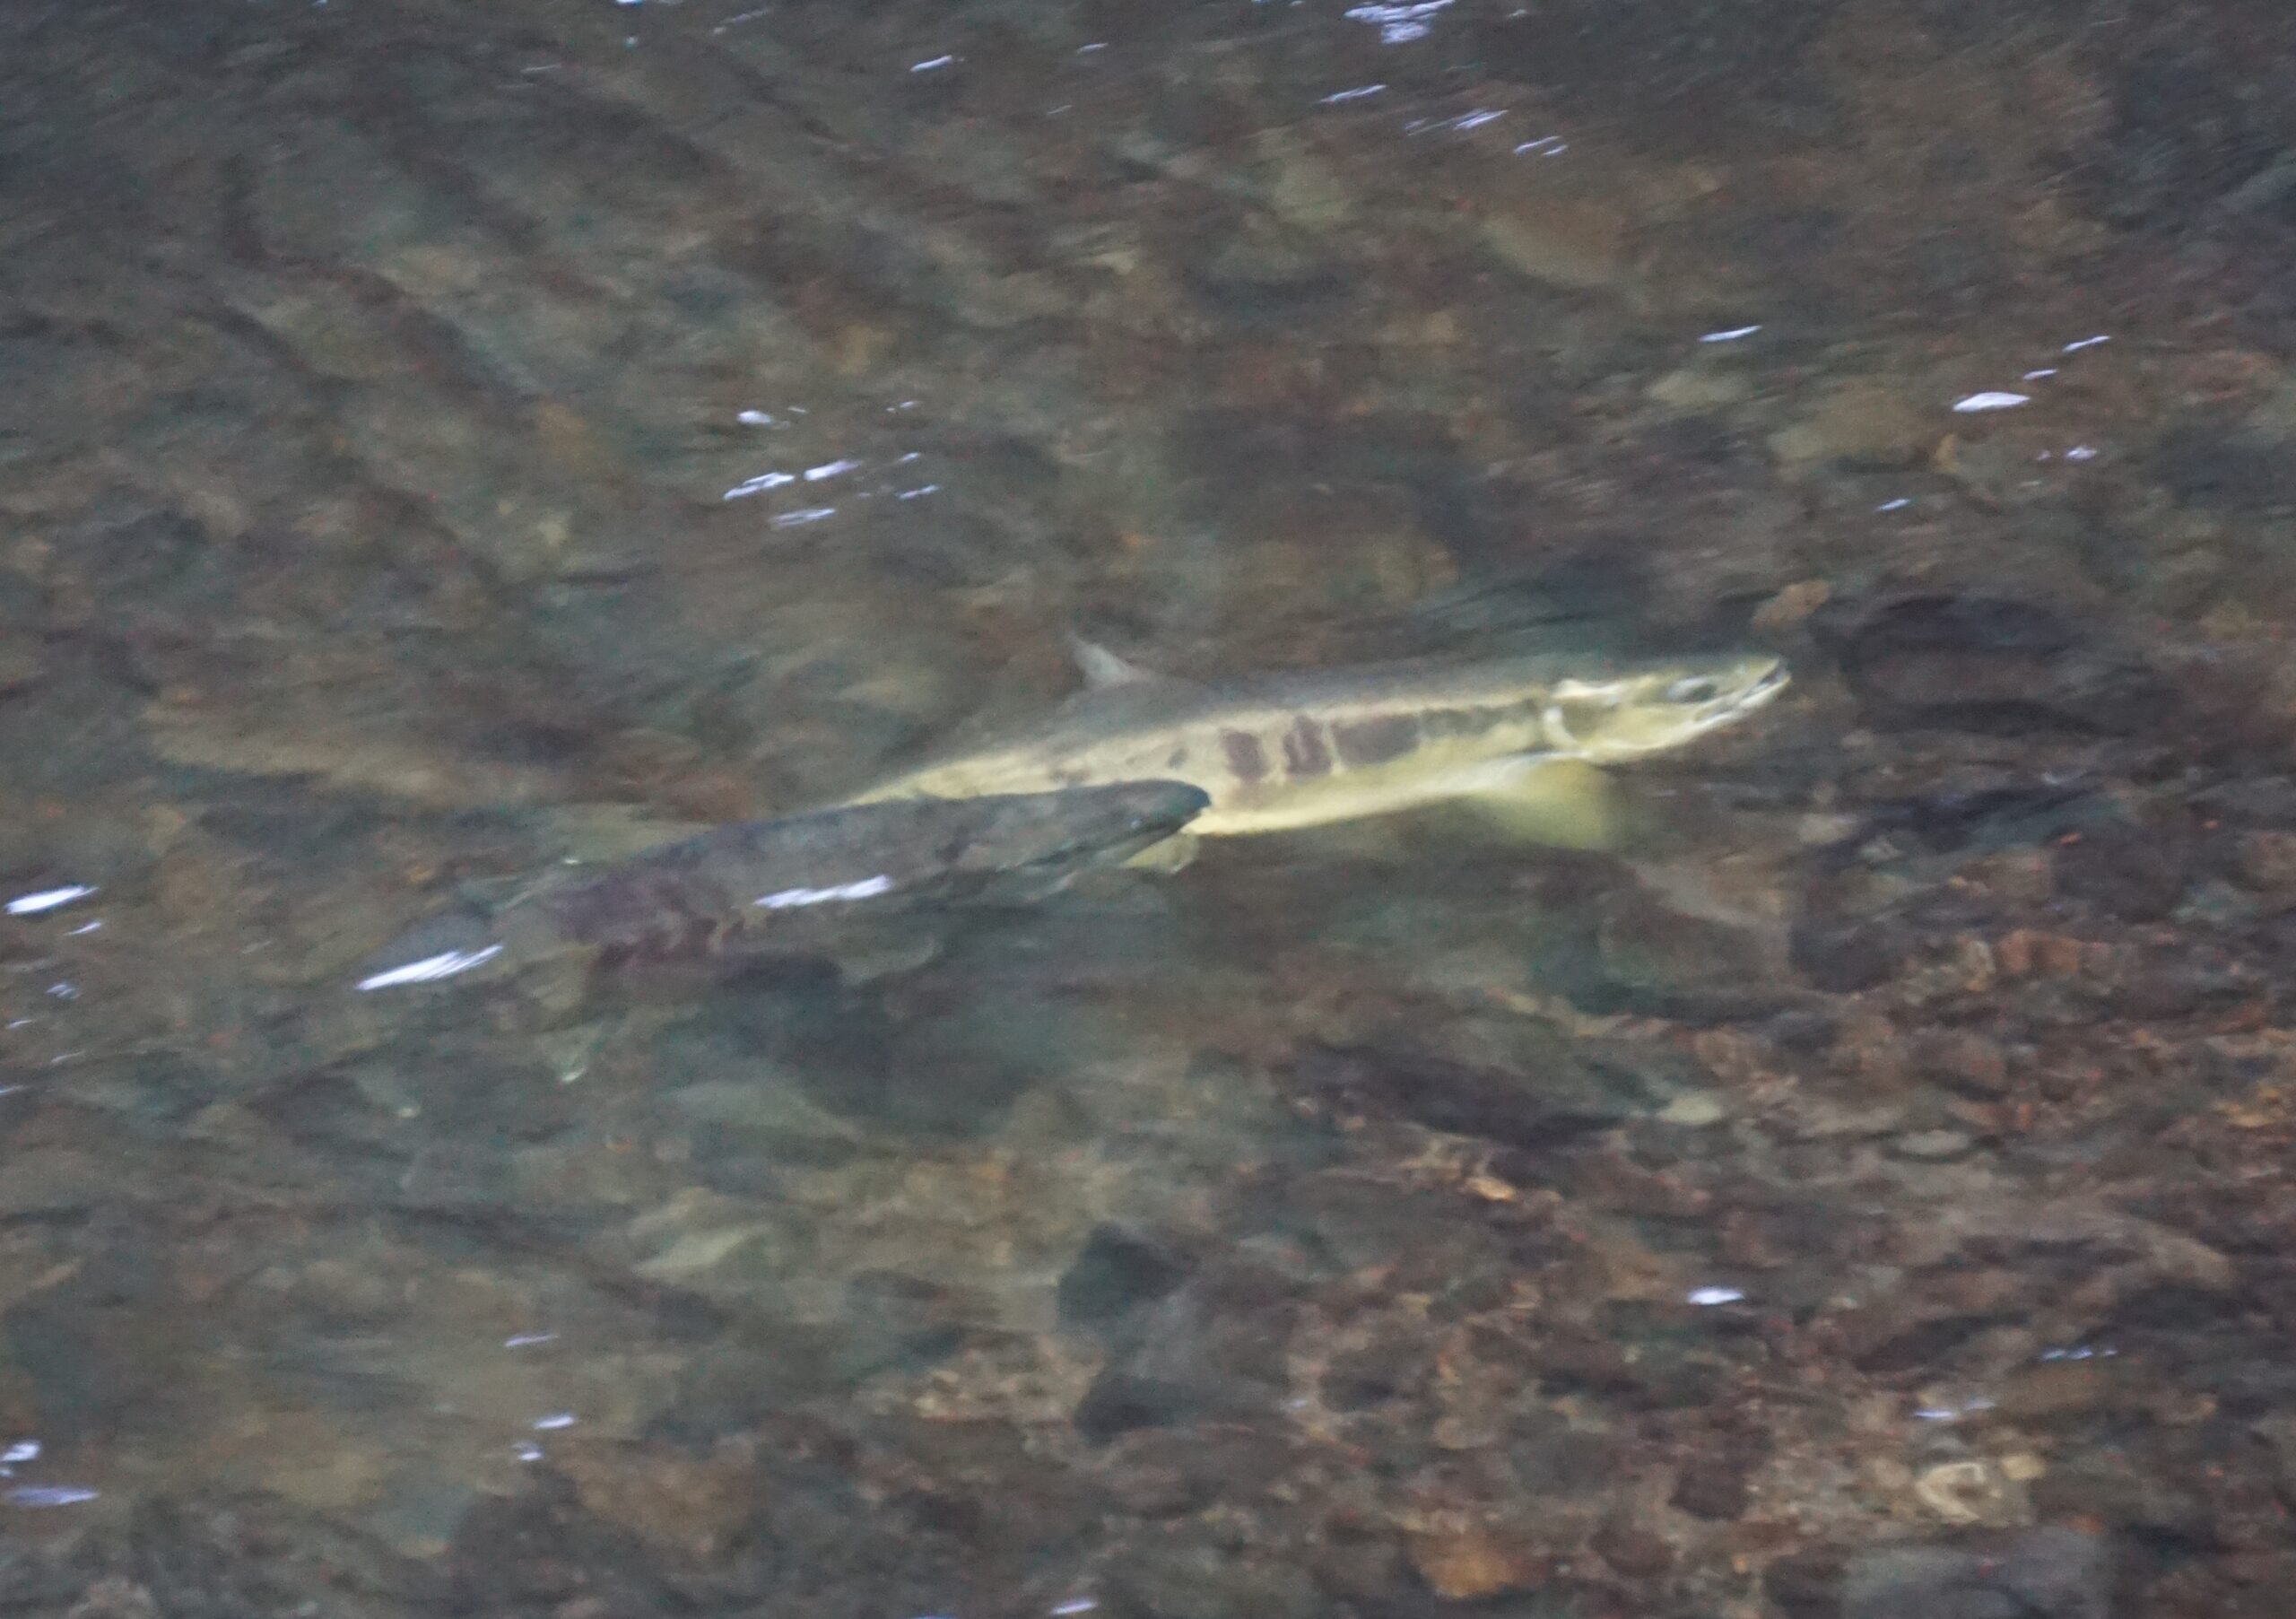 Rains Bring Highly Unusual Salmon Sightings in Marin County